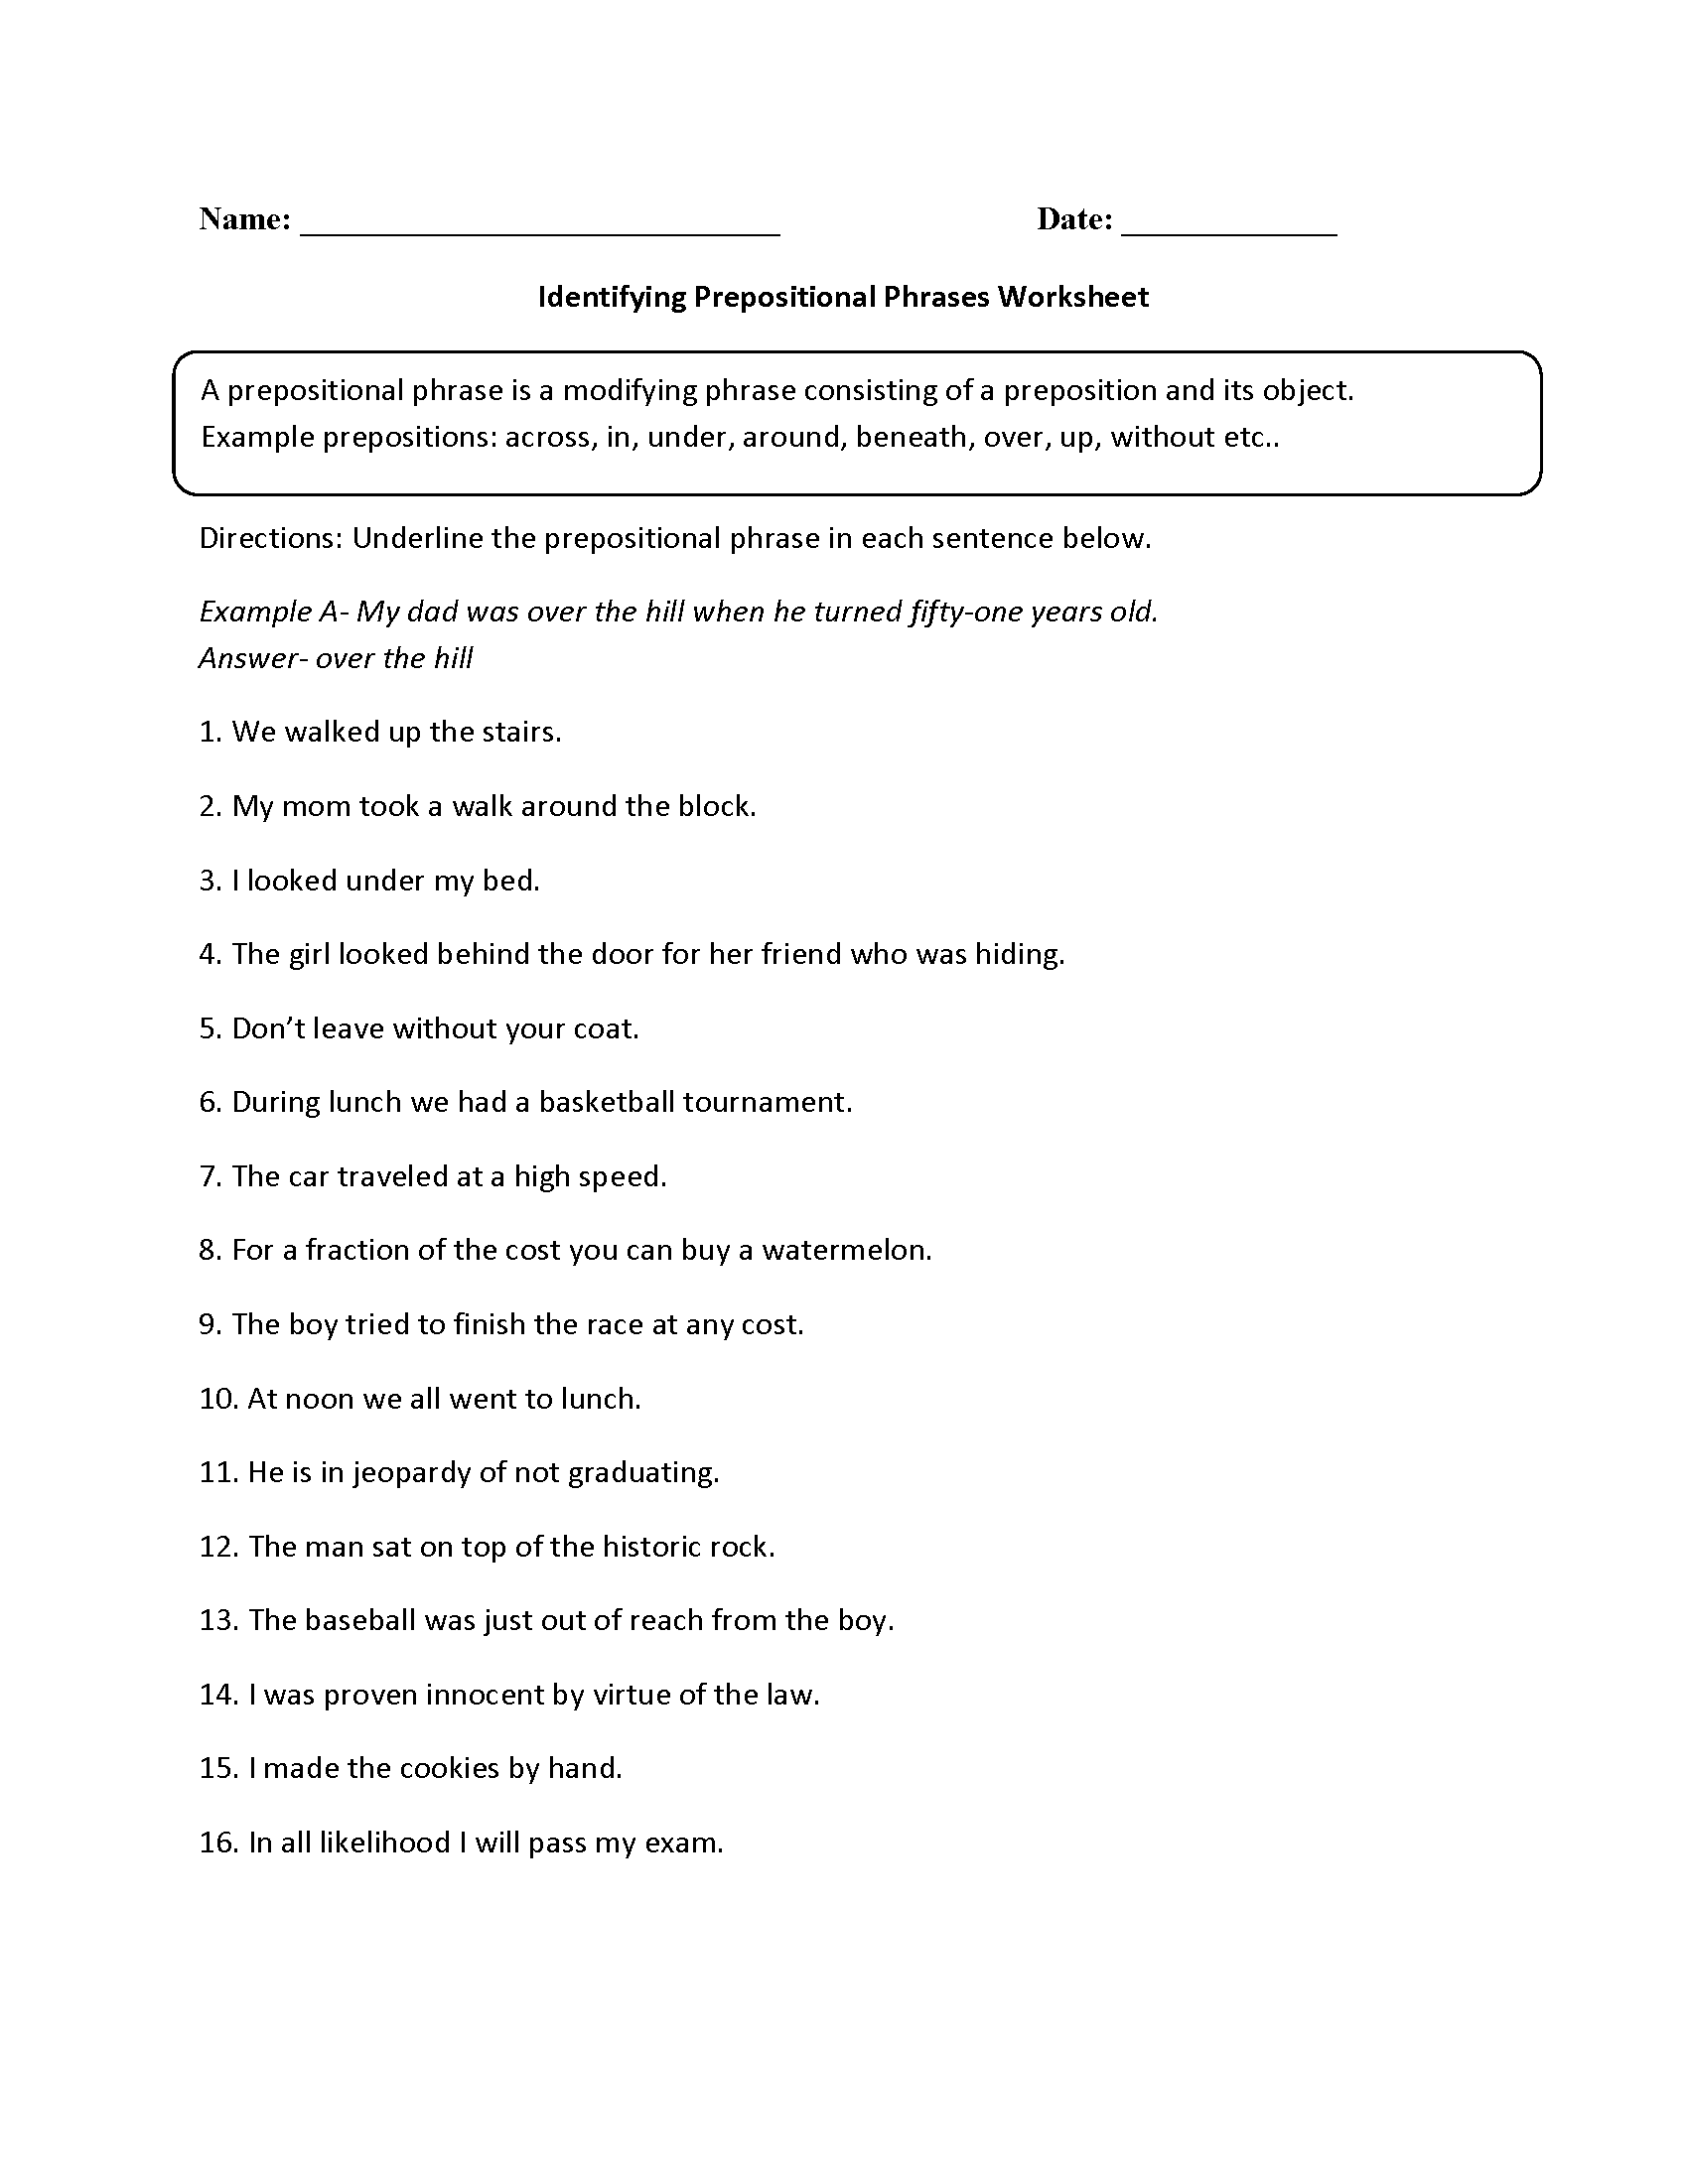 Parts of a Sentence Worksheets | Prepositional Phrase Worksheets